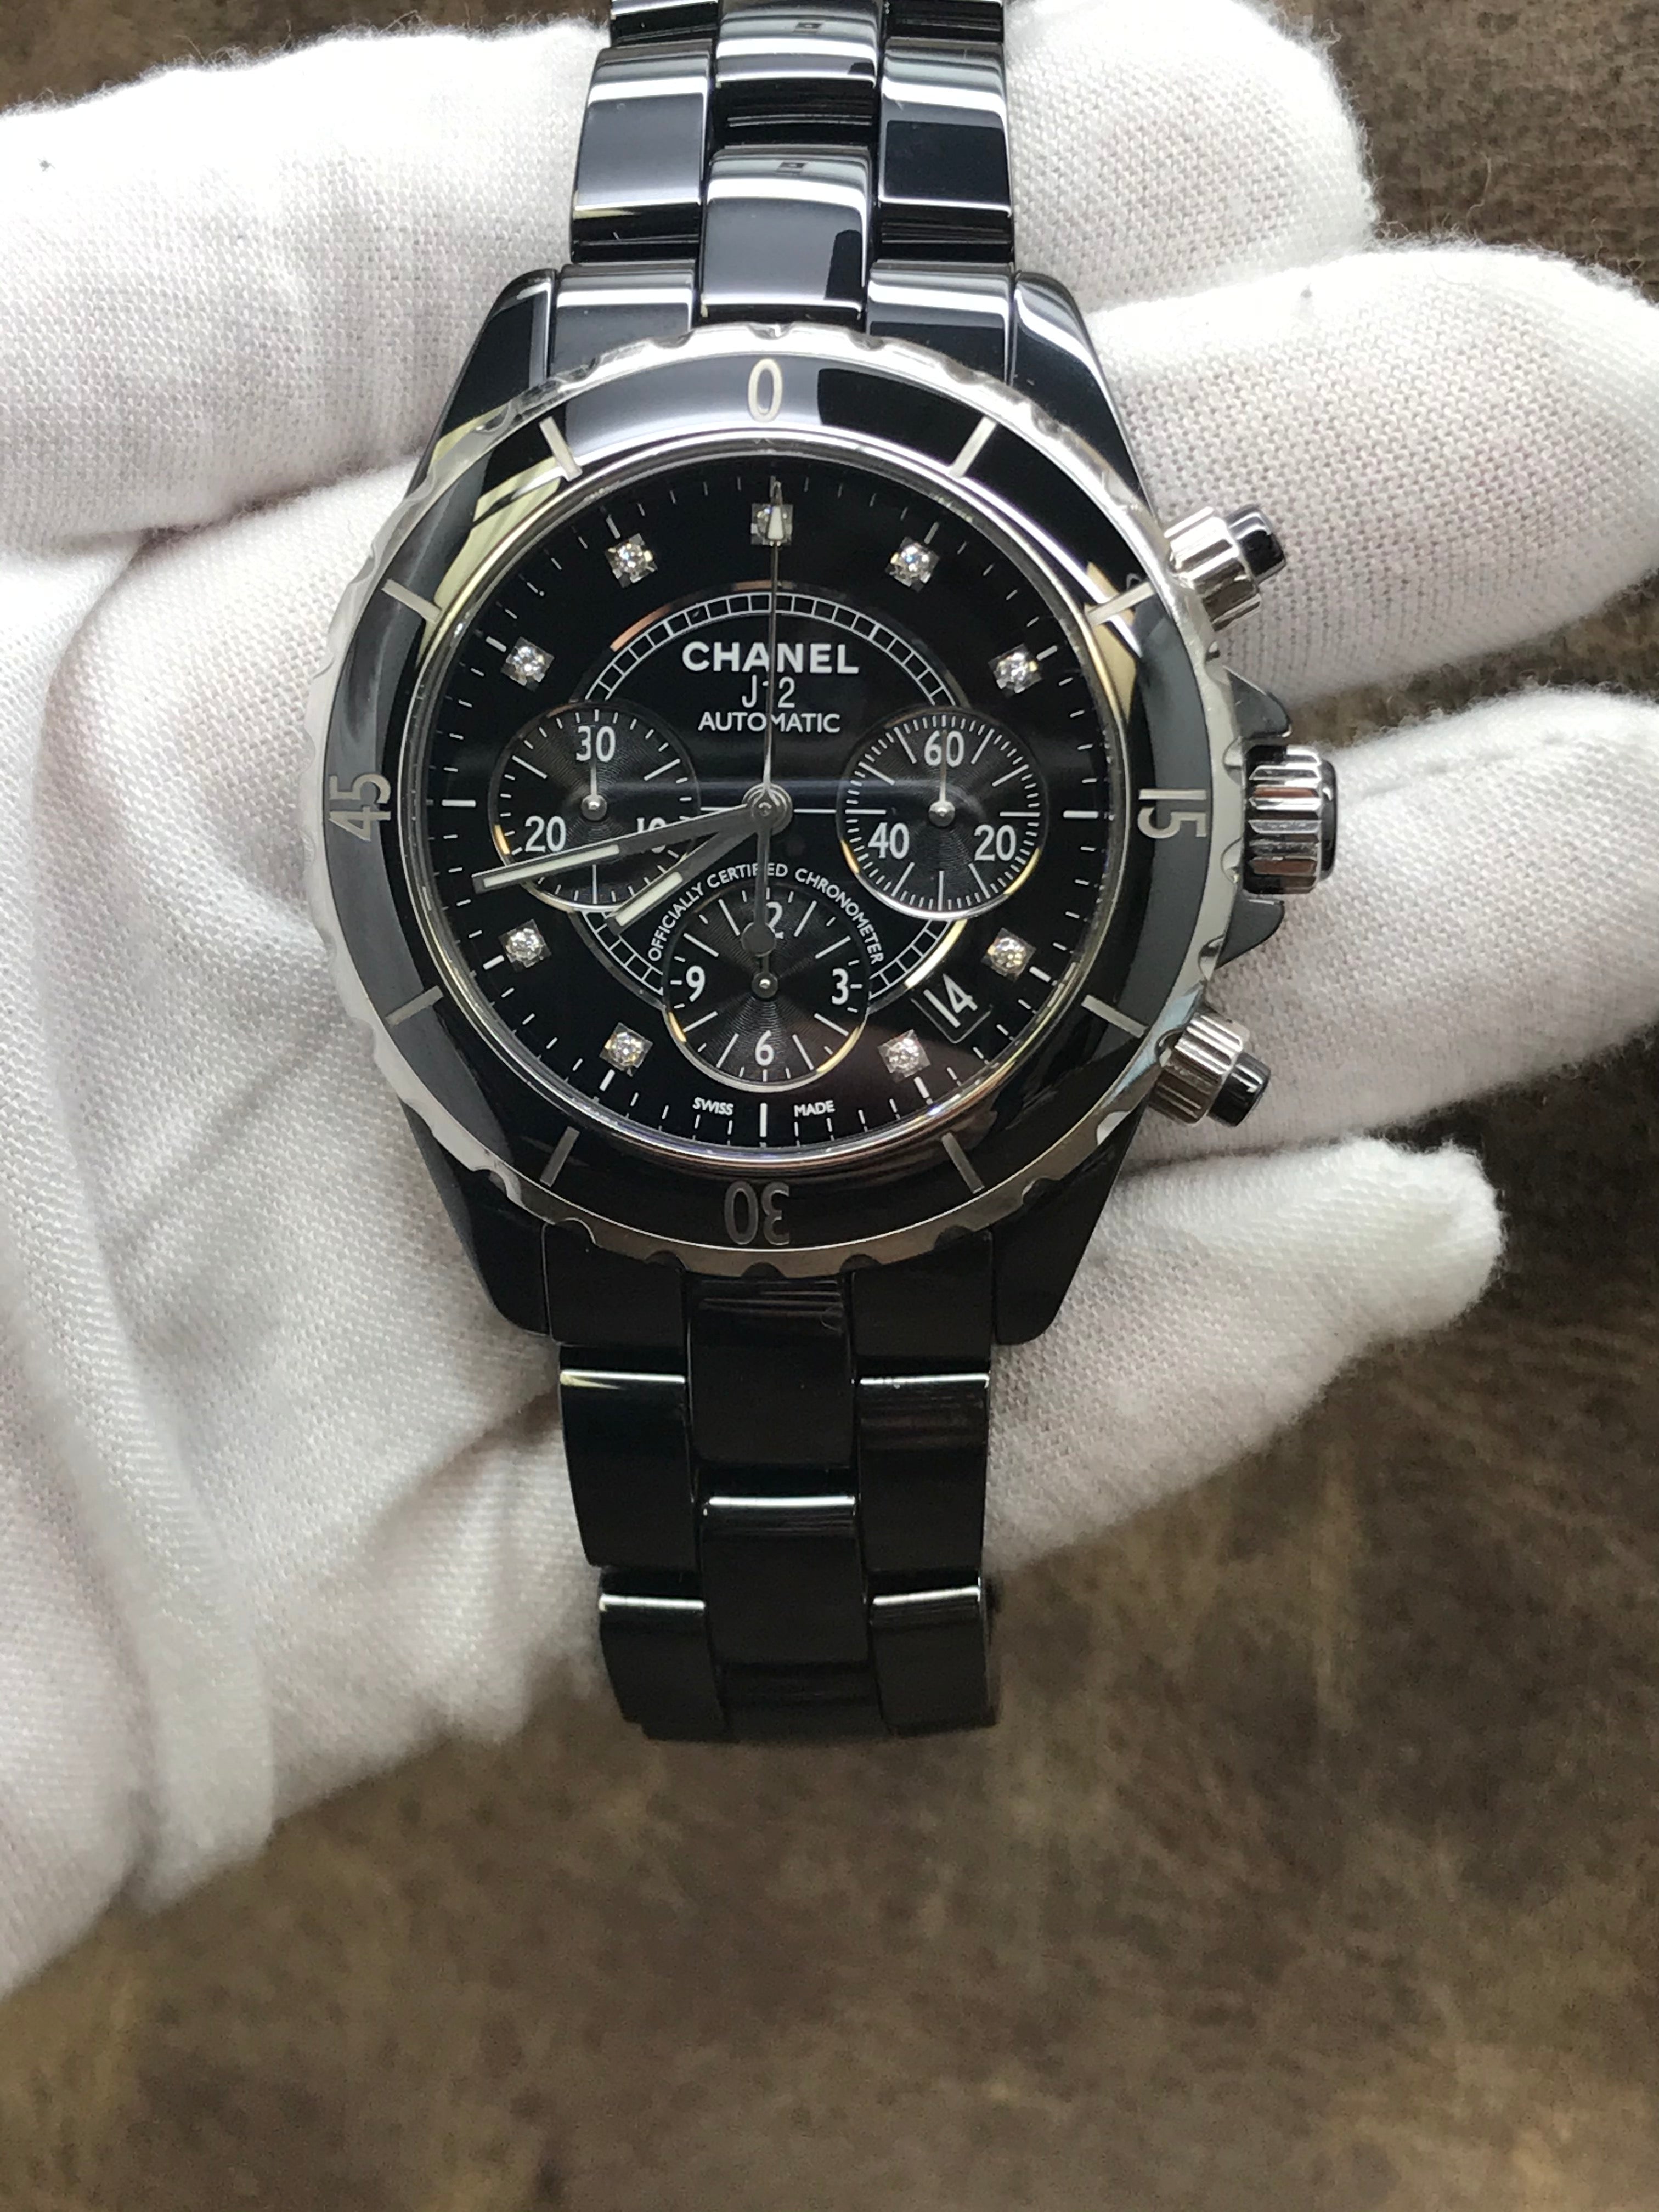 Chanel J12 White 33mm Ladies Watch H5698